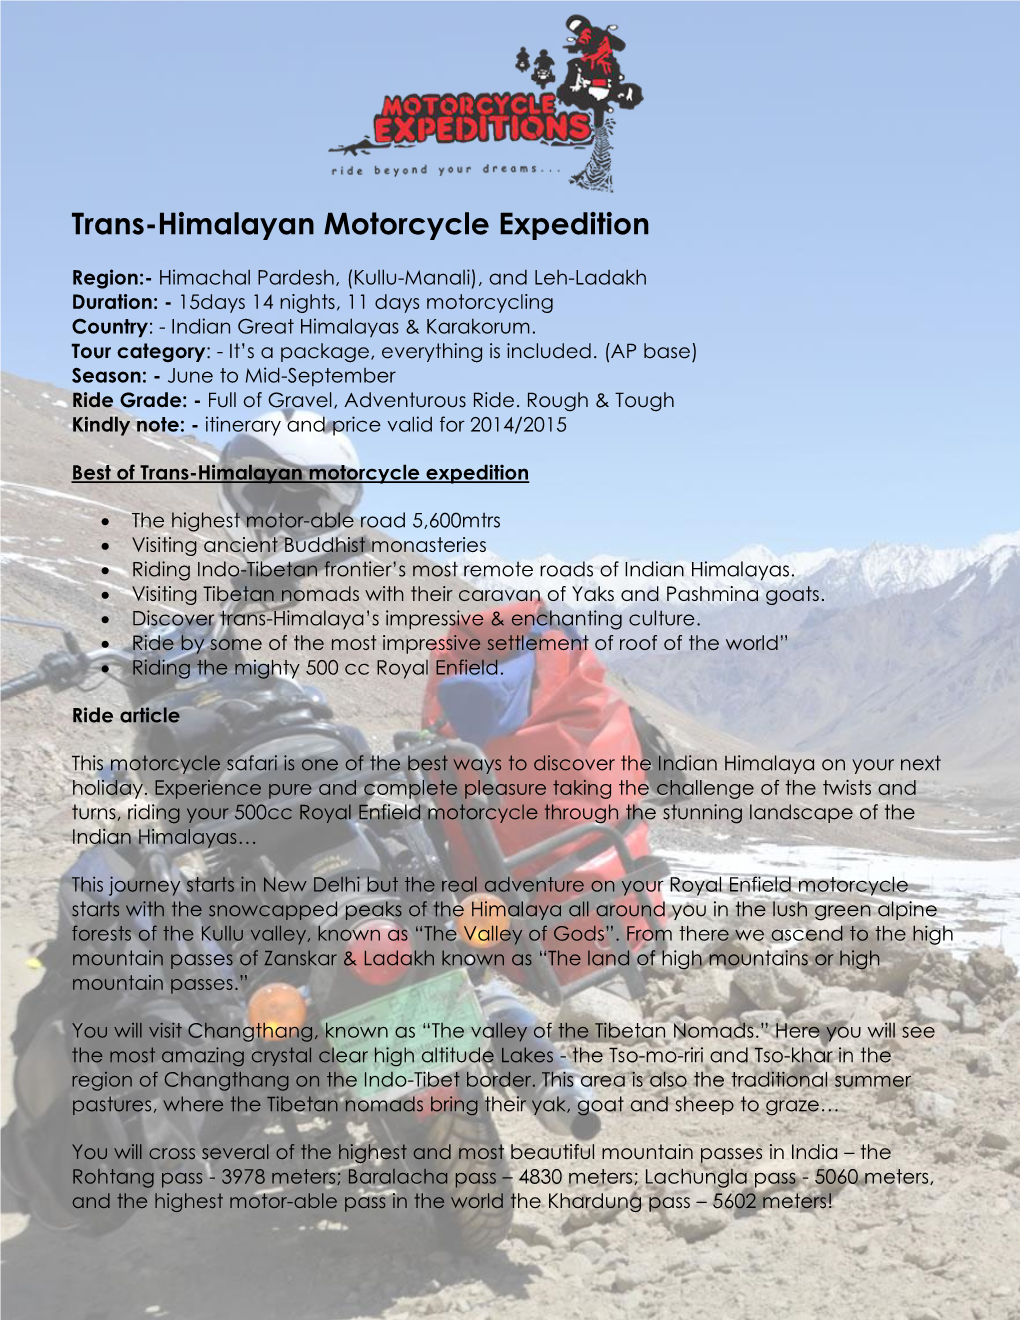 Trans-Himalayan Motorcycle Expedition